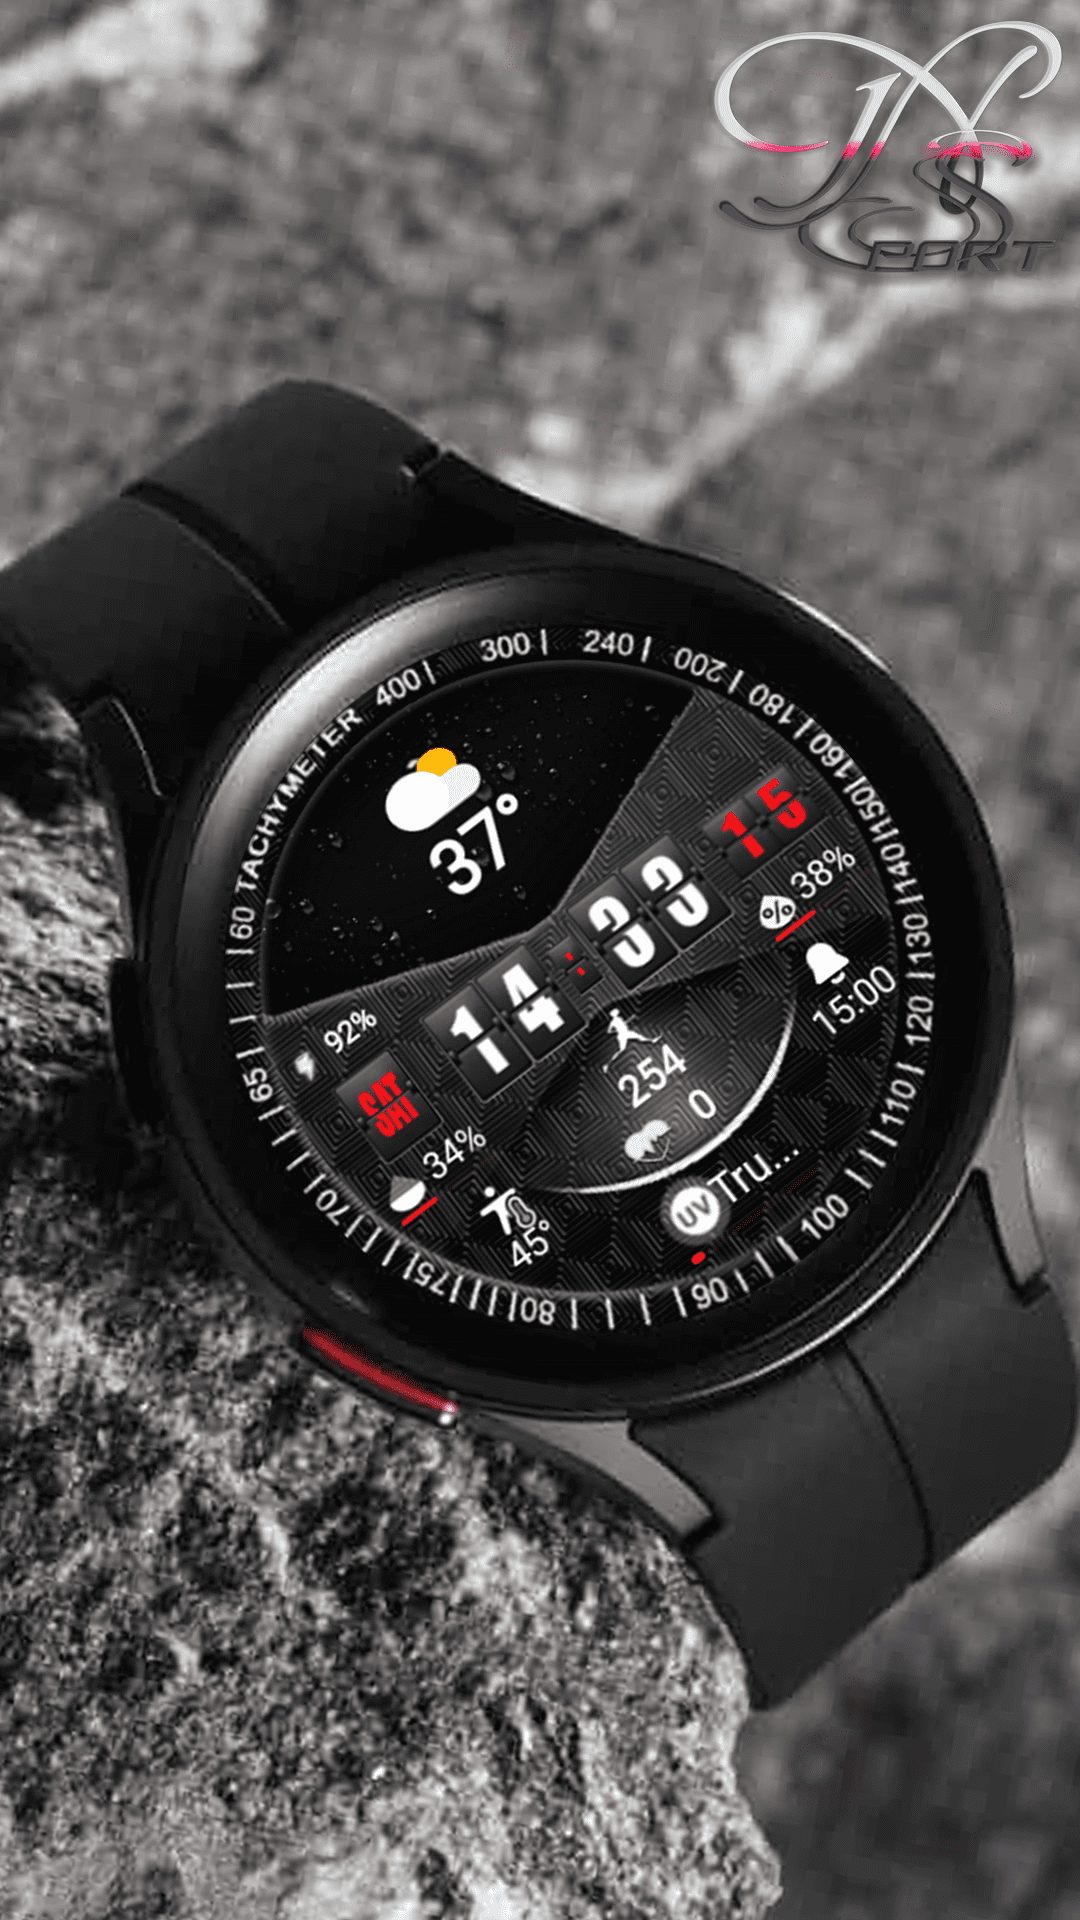 N-SPORT161]UltraView N-sport Watch Face Samsung - N-SPORT WATCH FACE